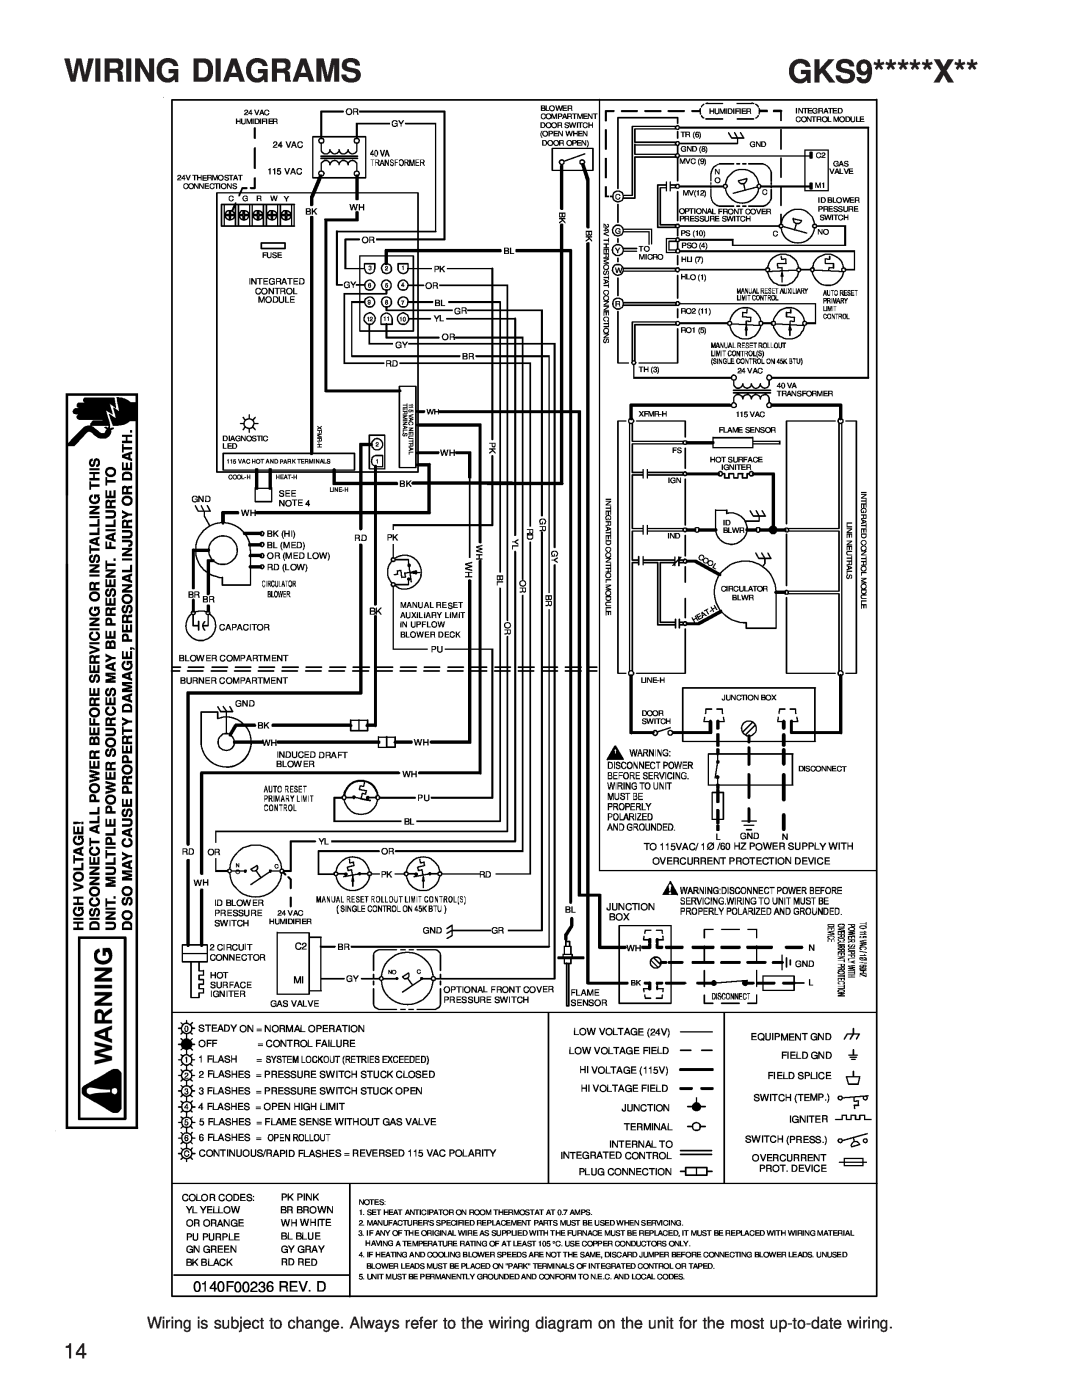 Goodman Mfg service manual Wiring Diagrams, GKS9*****X, 0140F00236 REV. D 